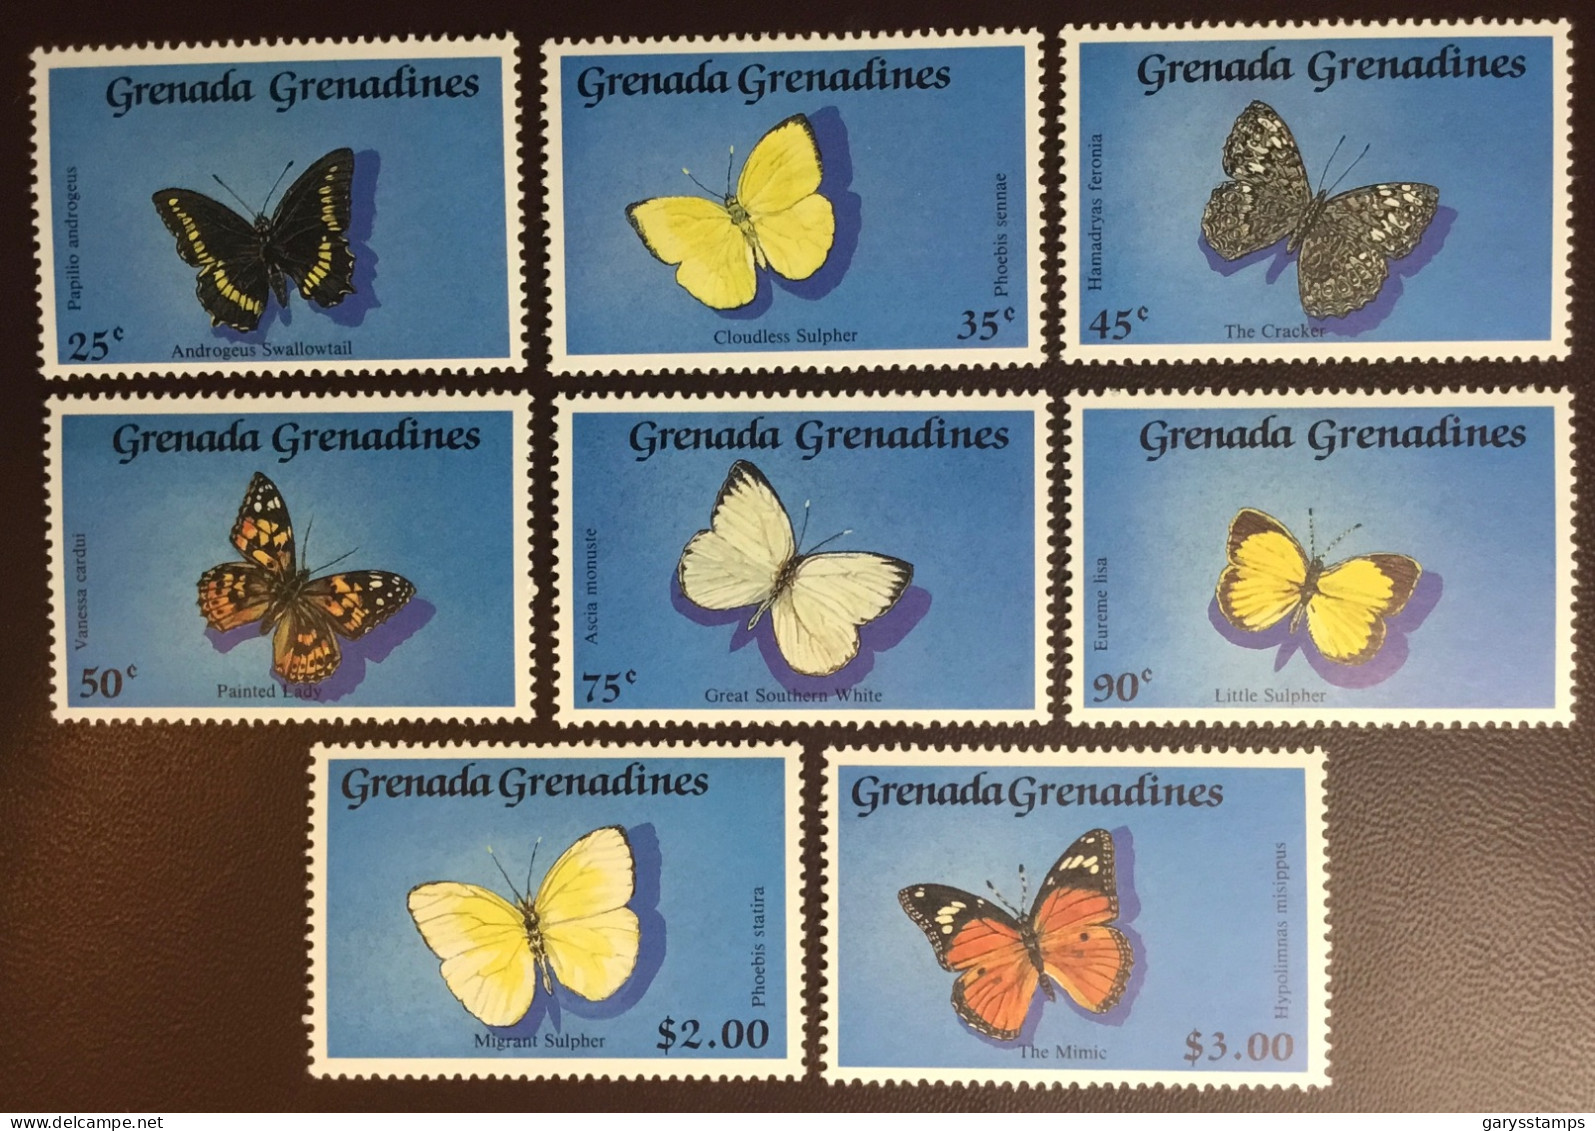 Grenada Grenadines 1989 Butterflies MNH - Butterflies